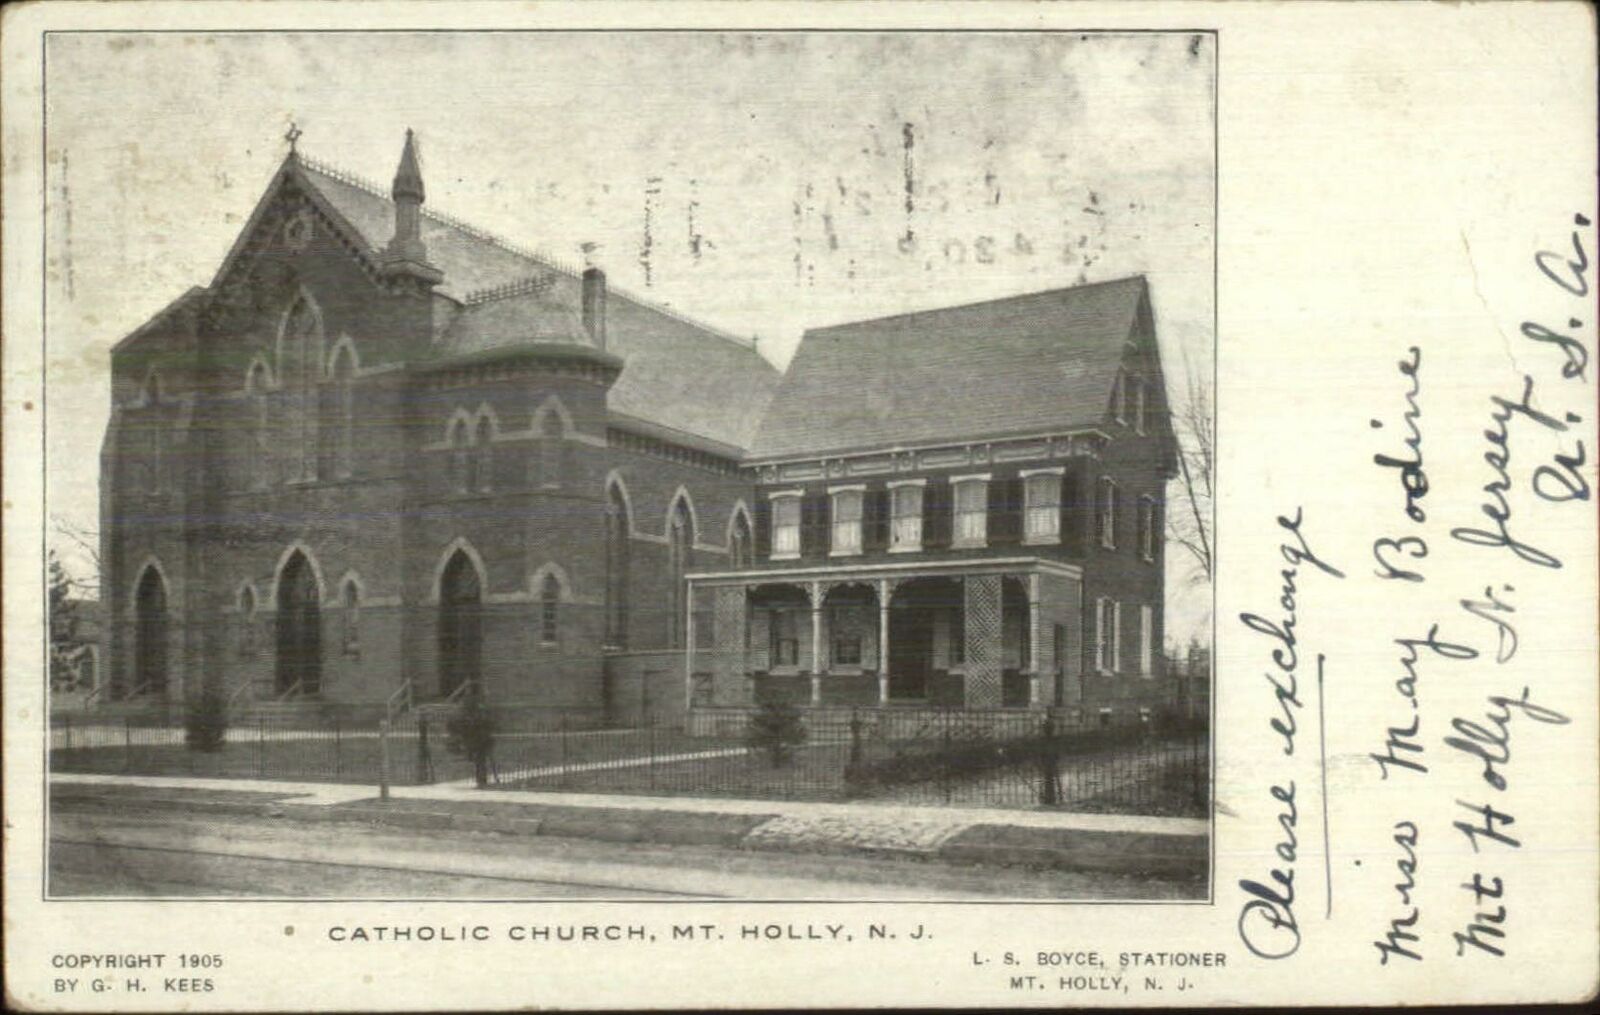 Mount Holly - Roman Catholic Church - 1906